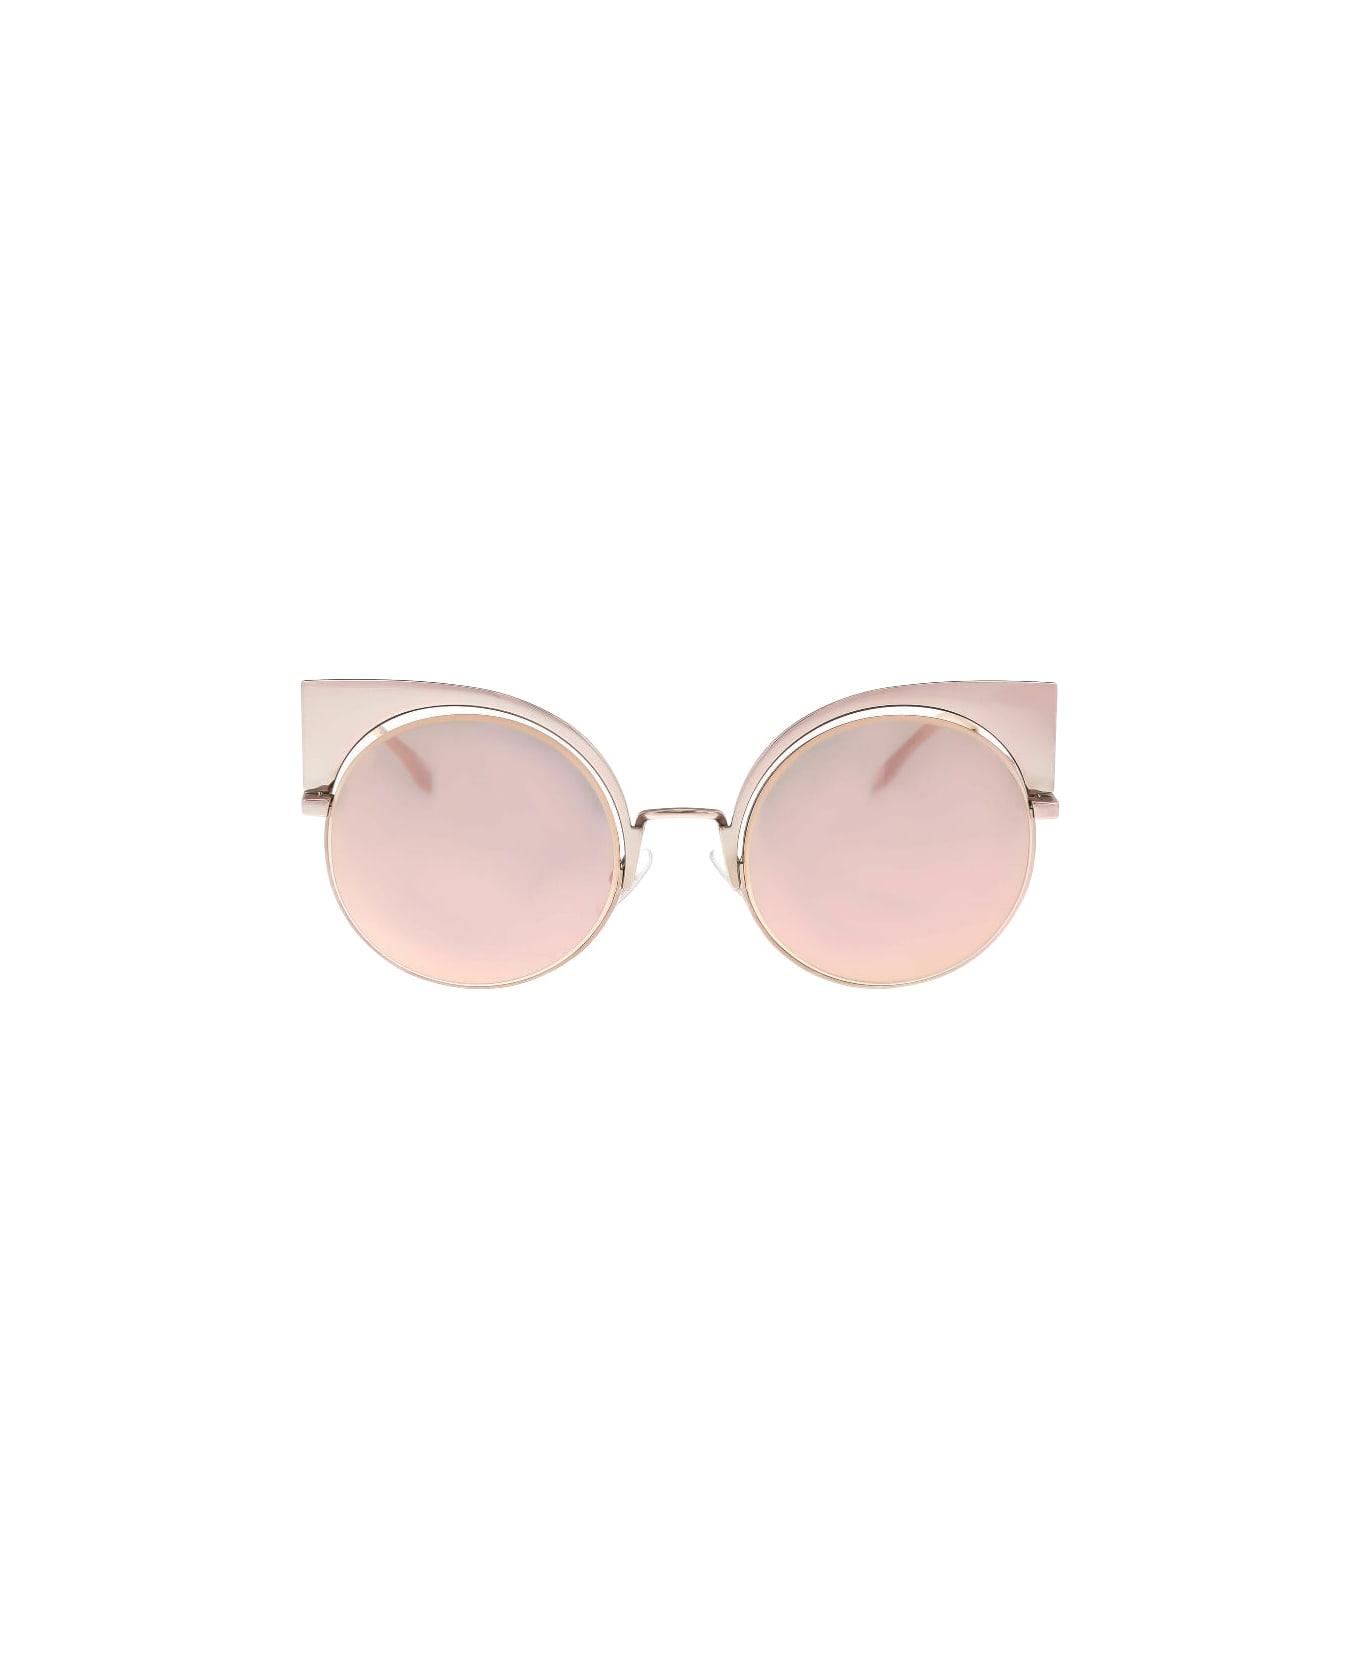 Fendi Eyewear Ff 0177 - Metallic Pink Sunglasses サングラス